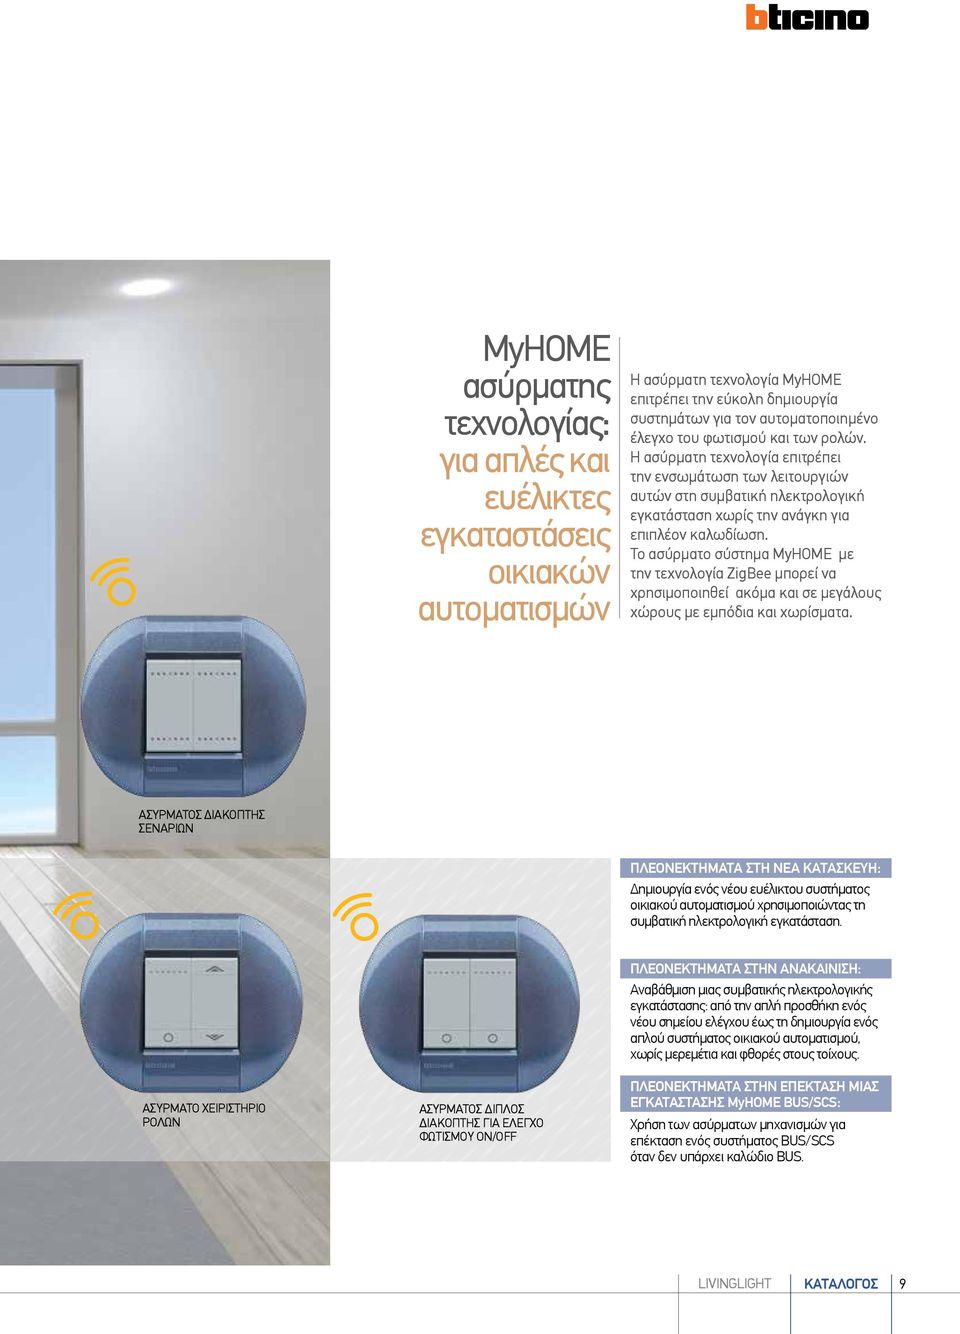 To ασύρματο σύστημα MyHOME με την τεχνολογία ZigBee μπορεί να χρησιμοποιηθεί ακόμα και σε μεγάλους χώρους με εμπόδια και χωρίσματα.